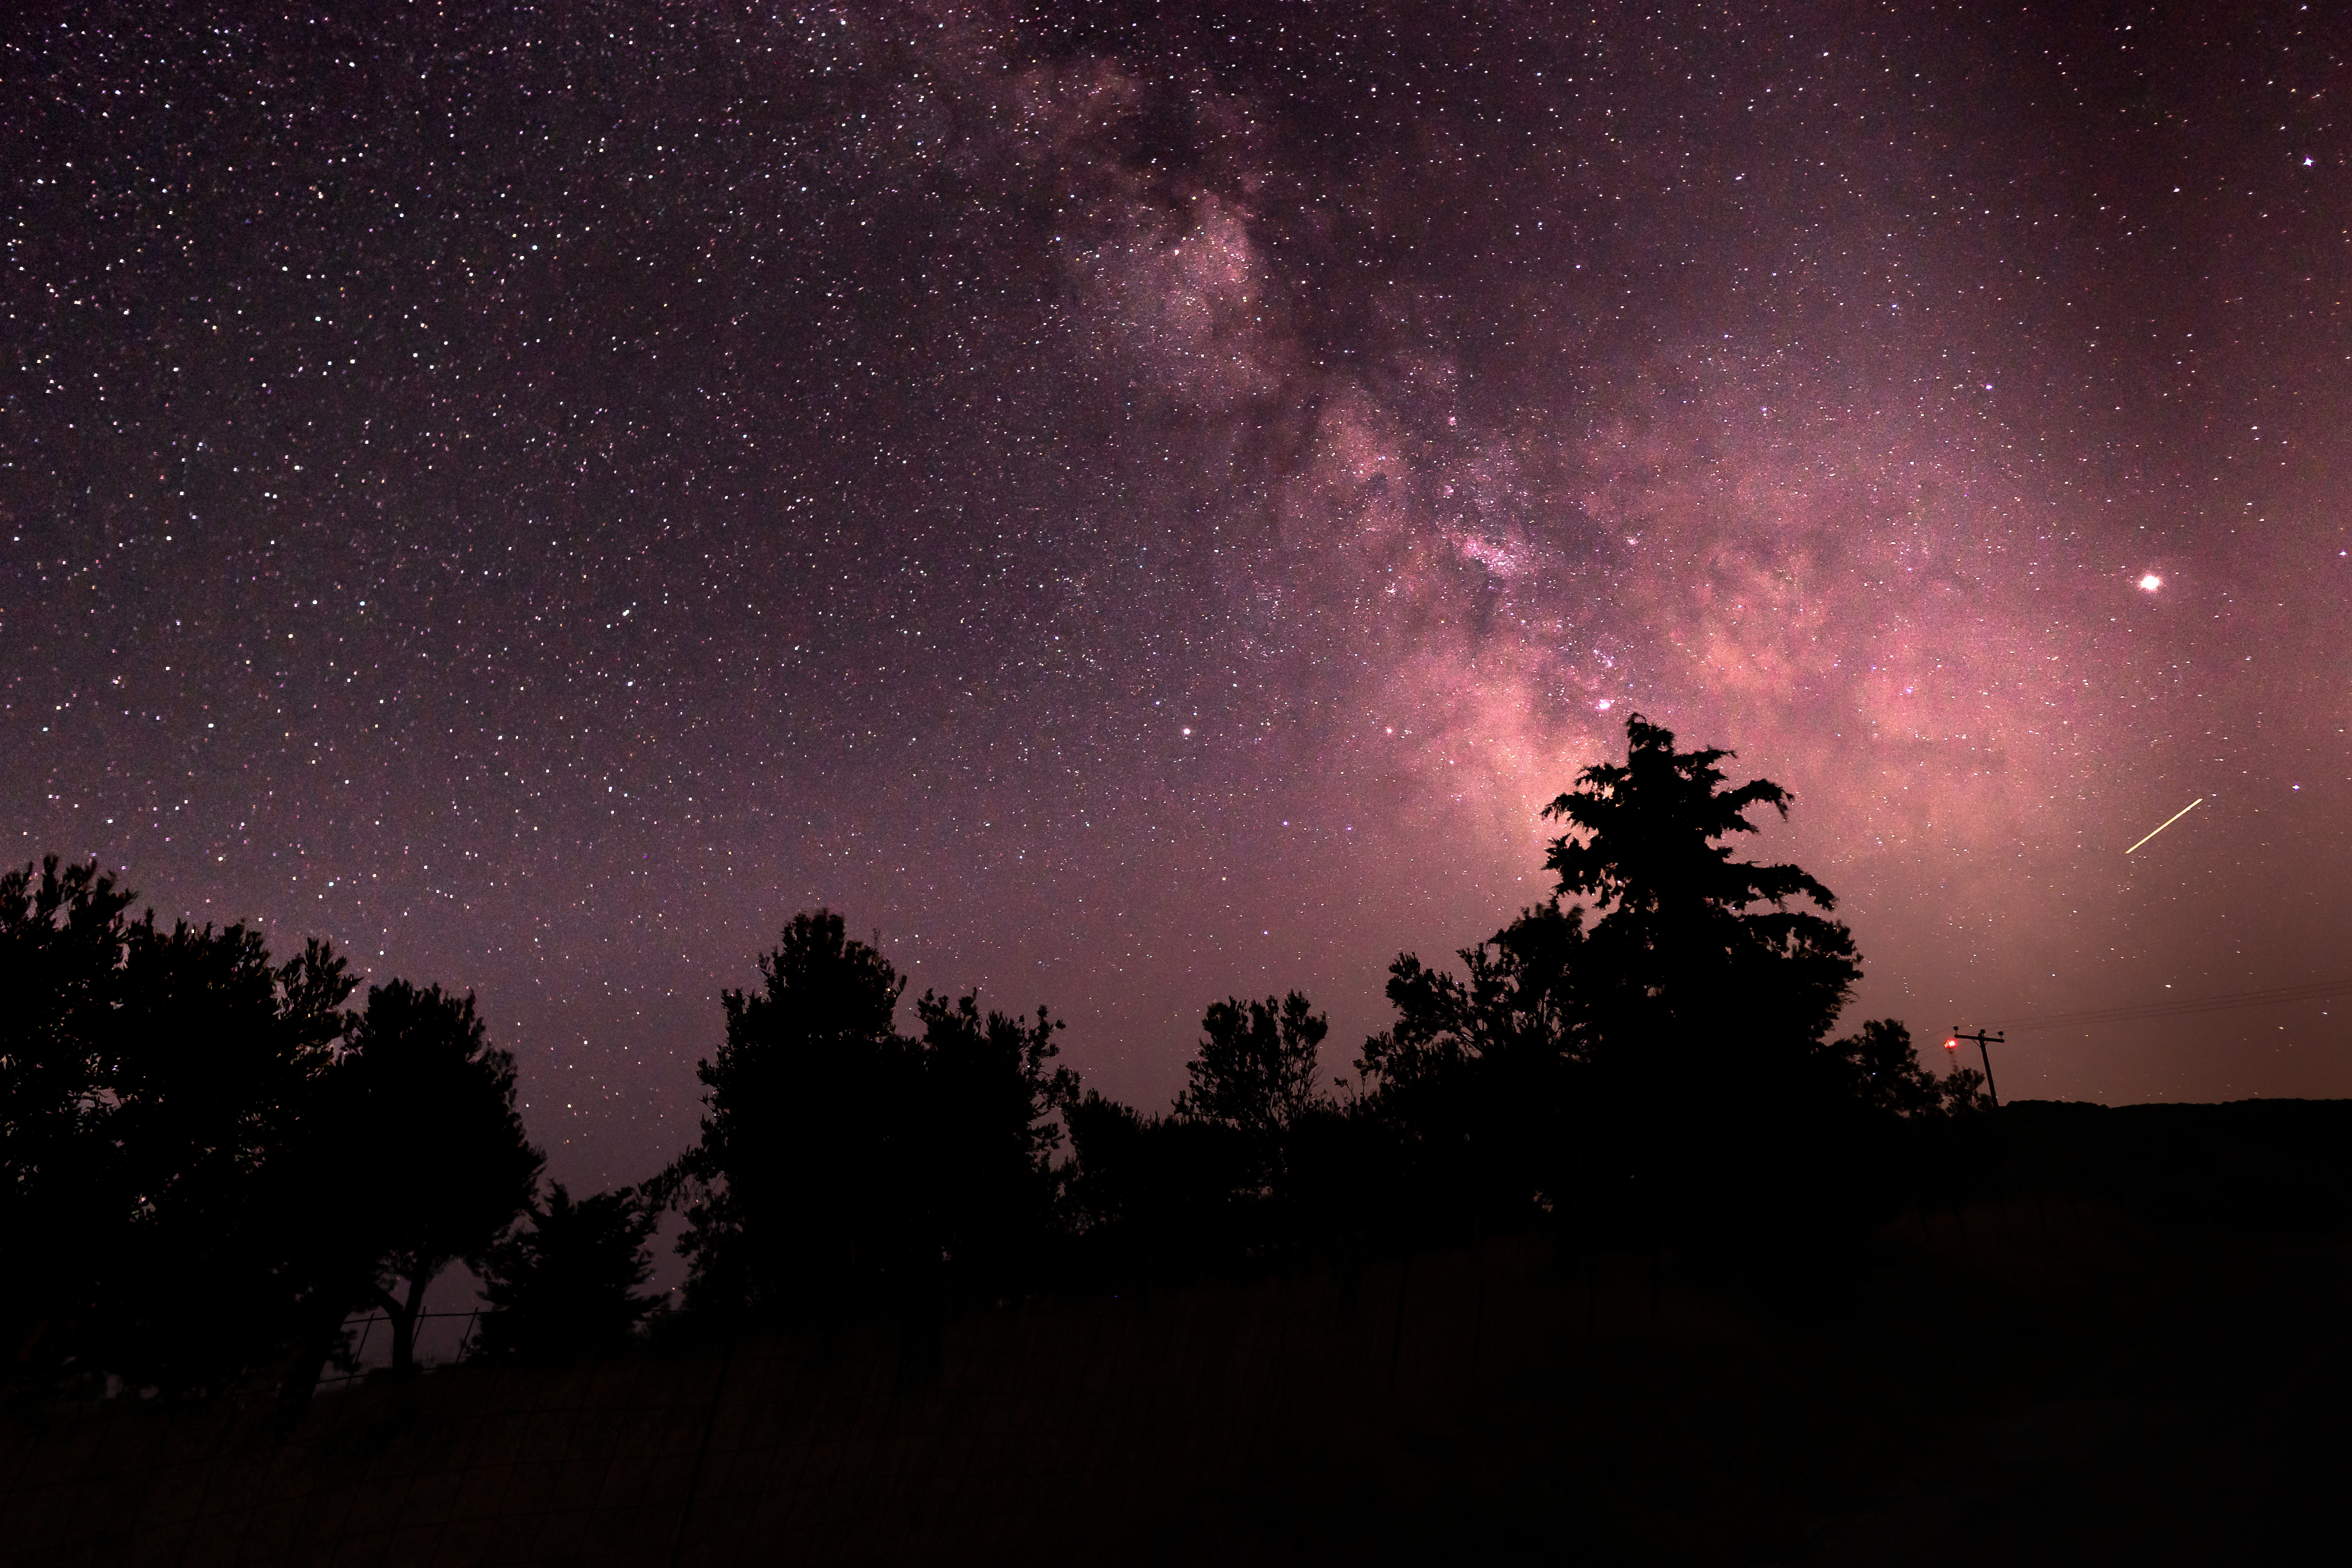 Night sky with stars and a meteorite streak